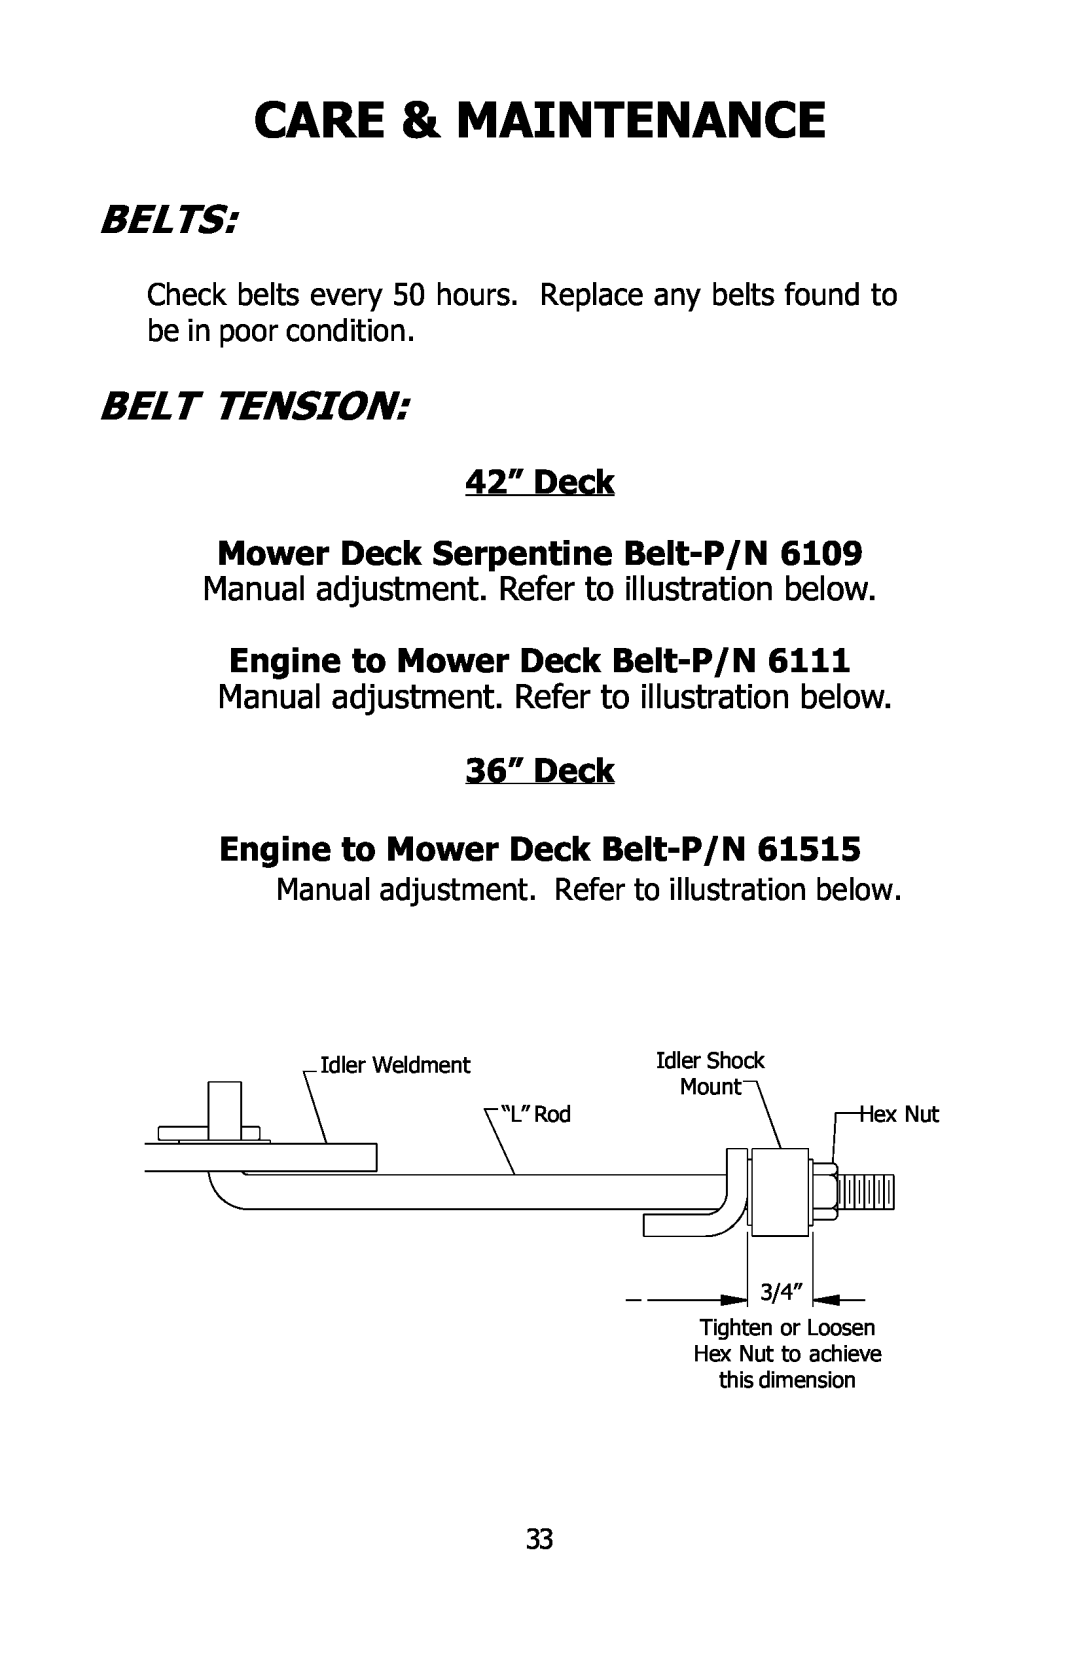 Dixon 16134-0803 manual Care & Maintenance, Belts, Belt Tension 